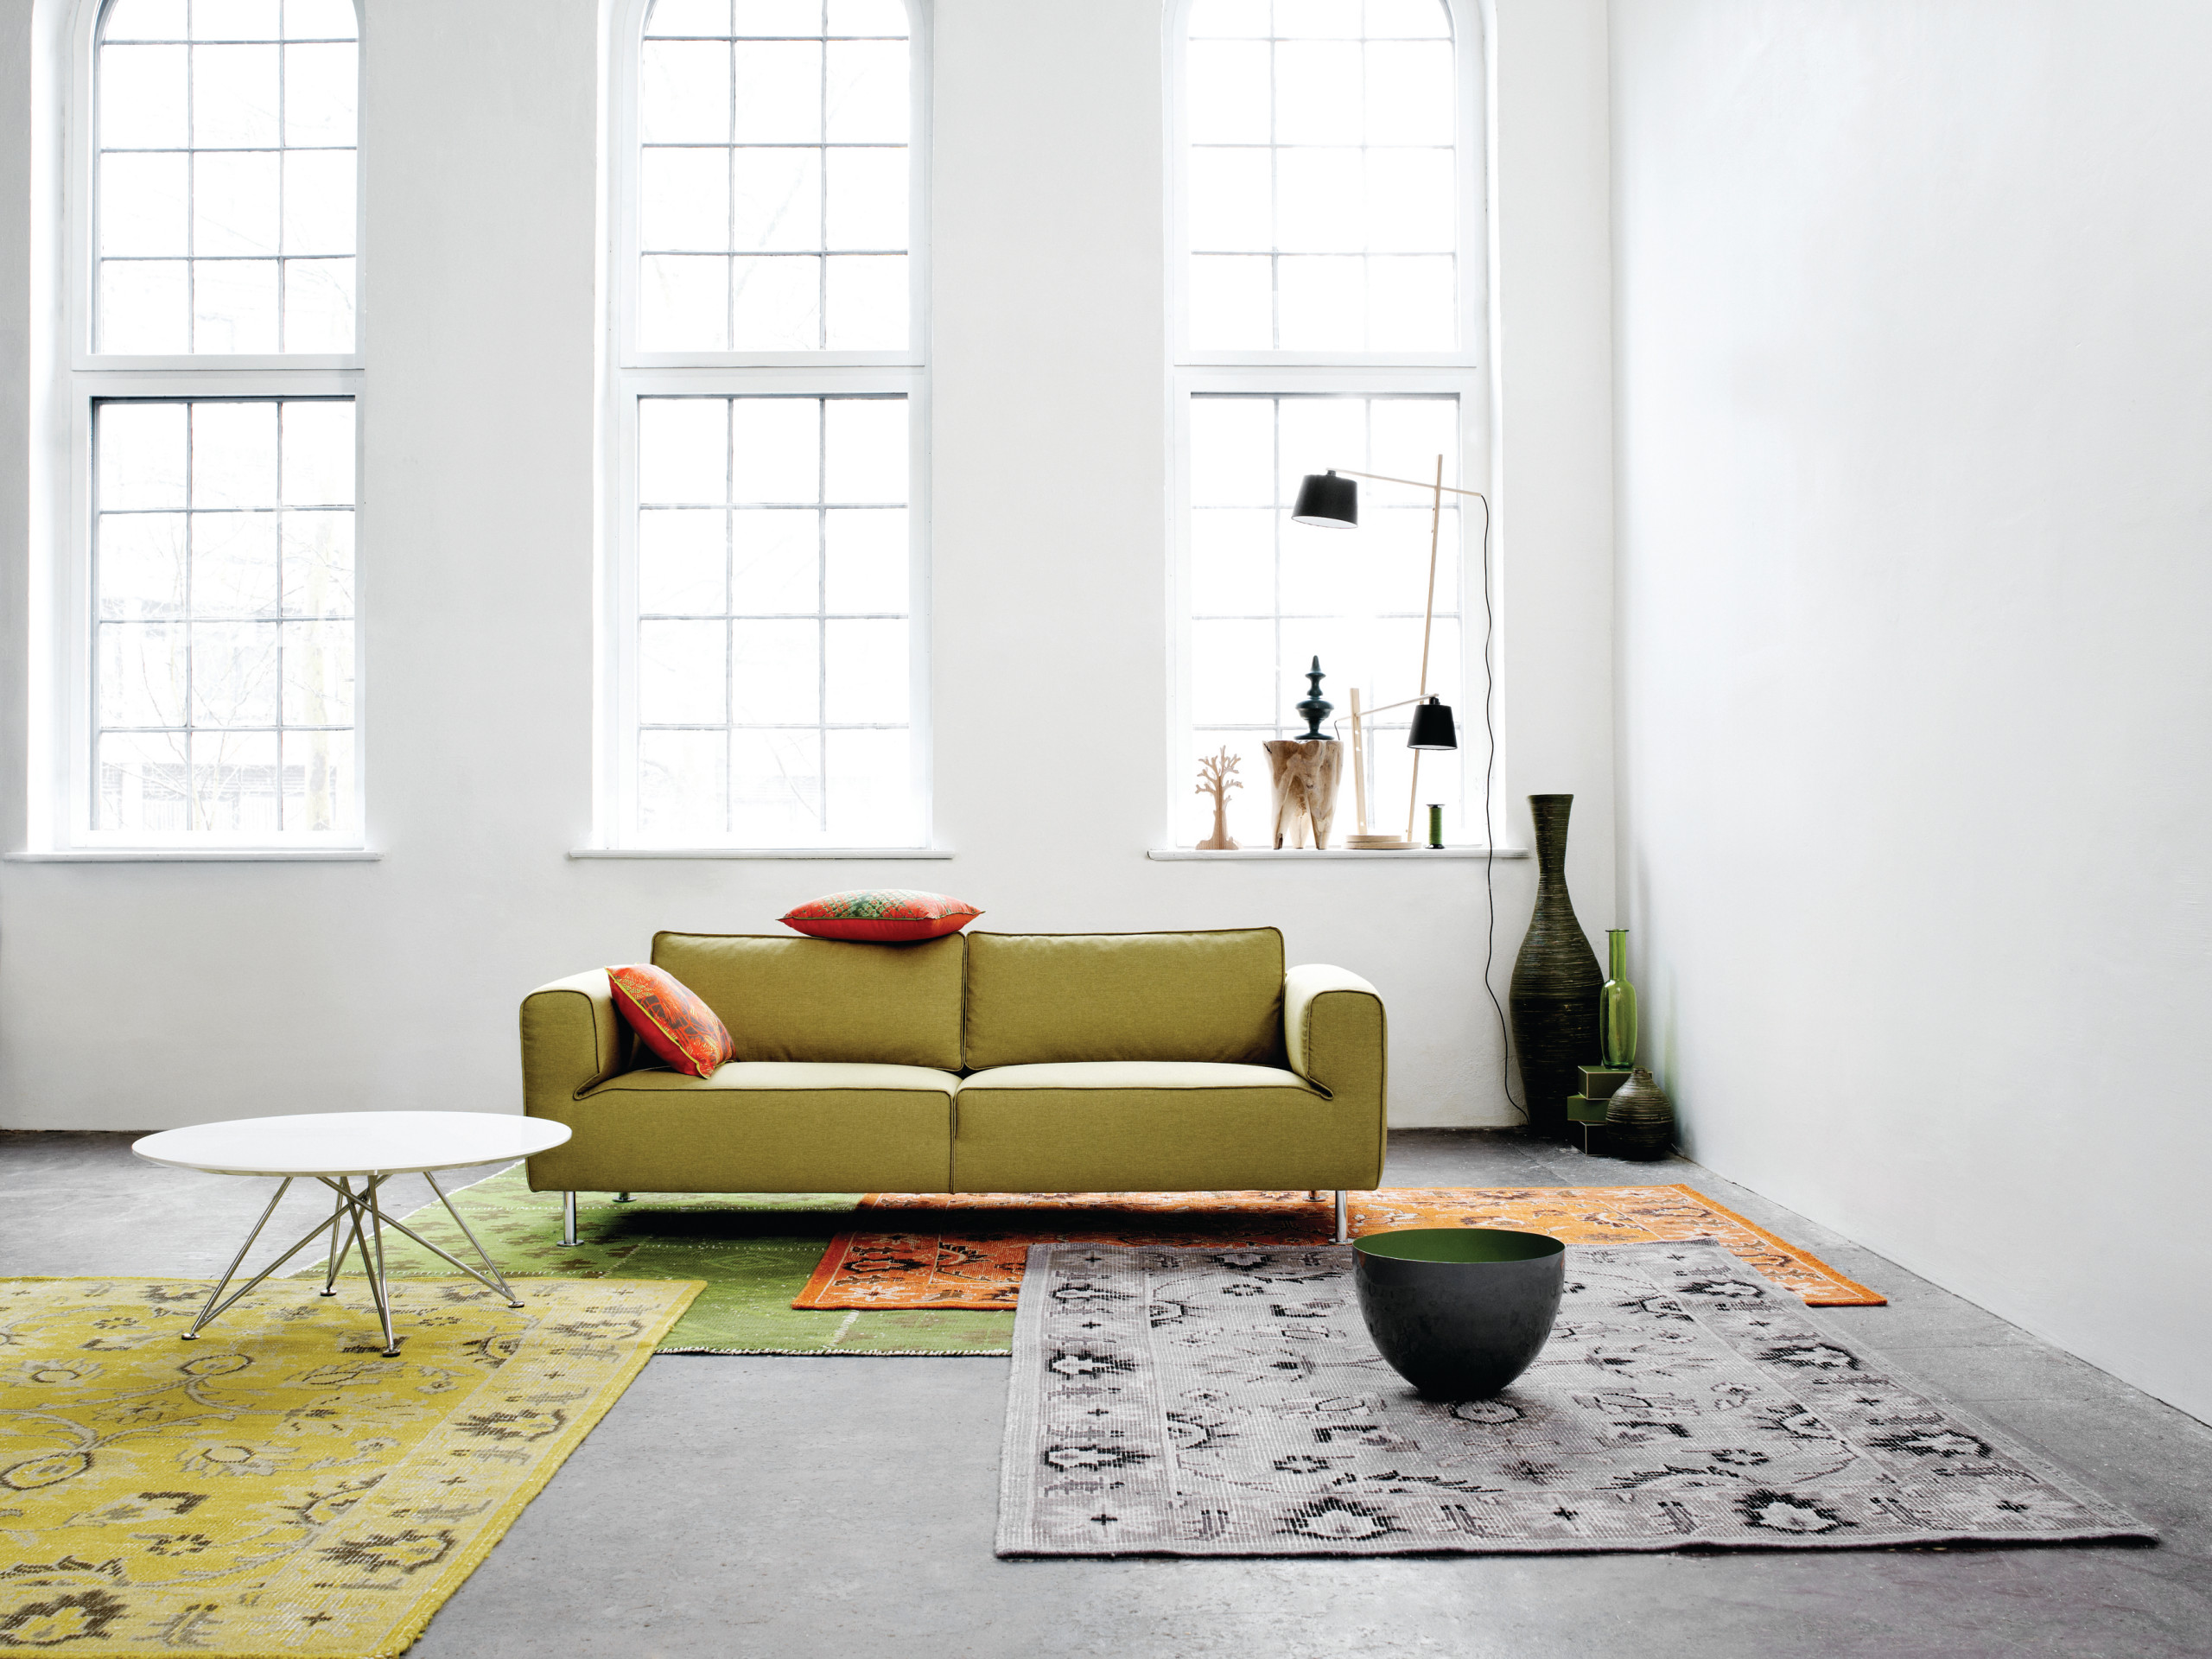 The Arco - Contemporary - Living Room - New York - by BoConcept US | Houzz